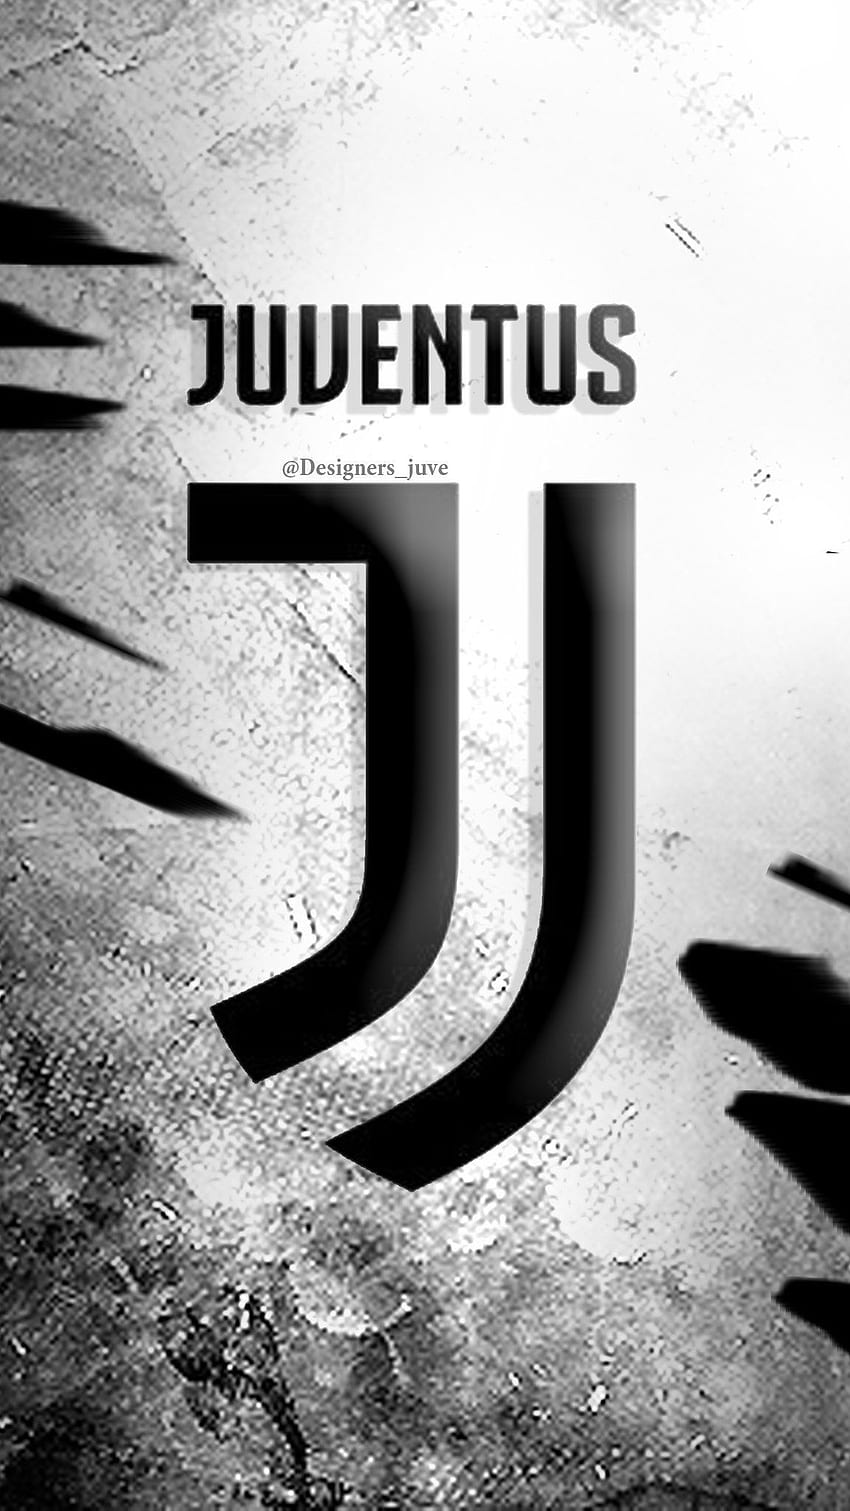 Wallpaper Juventus iPhone  Best Wallpaper HD  Juventus wallpapers  Football wallpaper Juventus